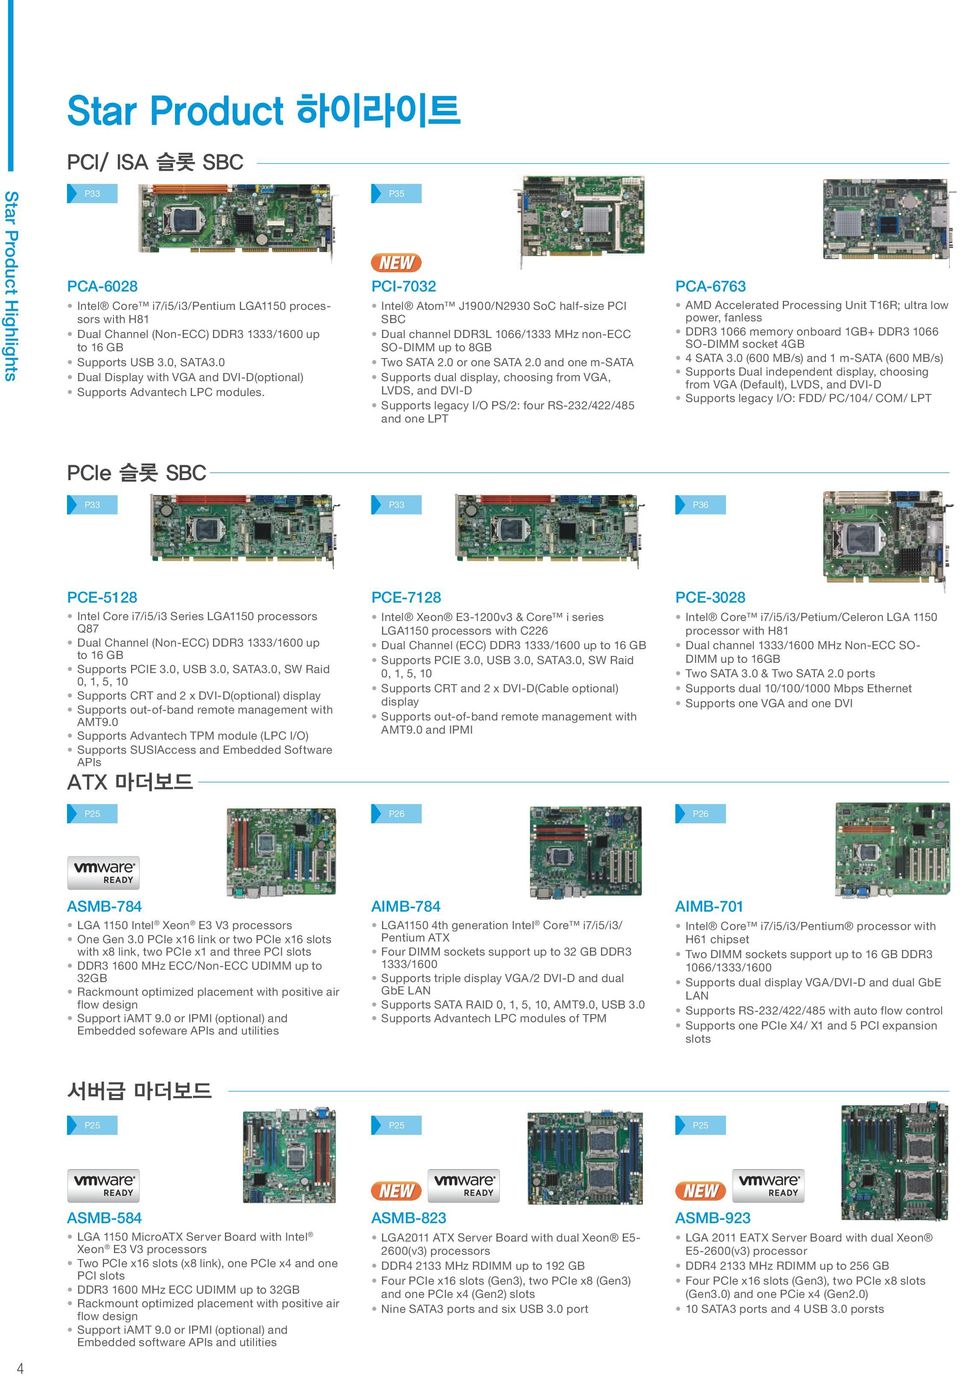 P35 PCI-7032 Intel Atom J1900/N2930 SoC half-size PCI SBC Dual channel DDR3L 1066/1333 MHz non-ecc SO-DIMM up to 8GB Two SATA 2.0 or one SATA 2.